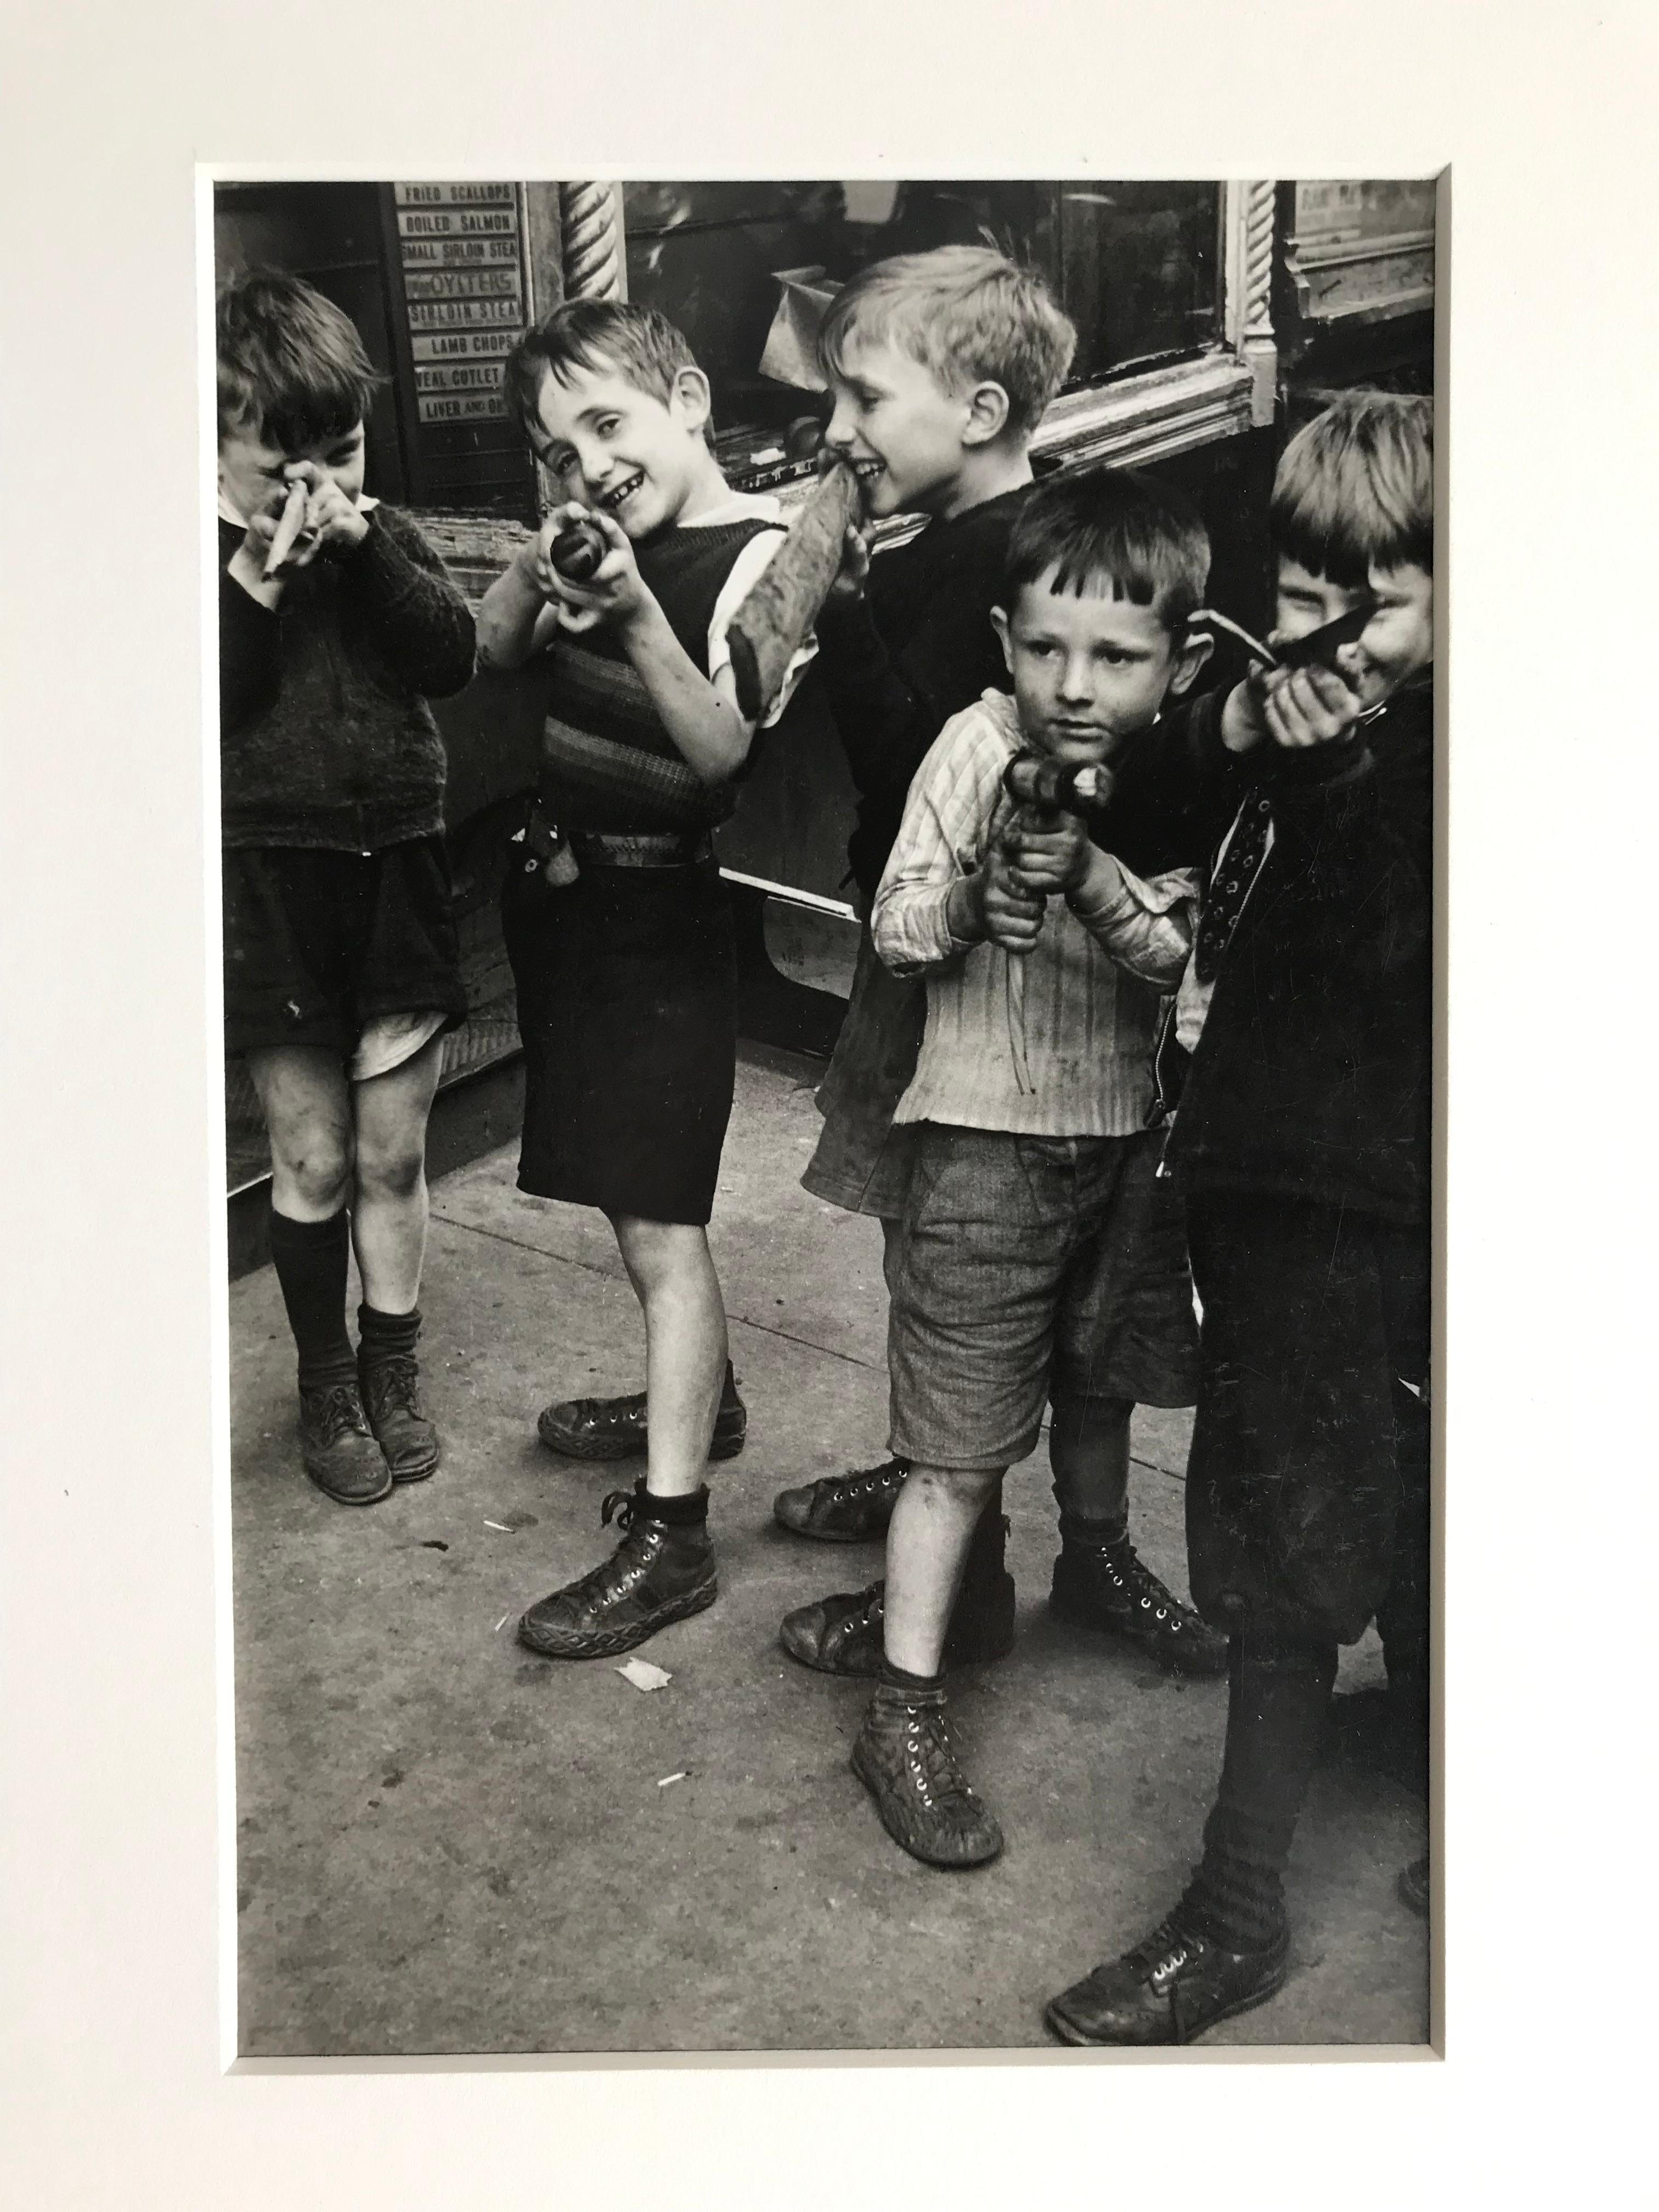 Helen Levitt Black and White Photograph - Boys With Guns, New York City, 